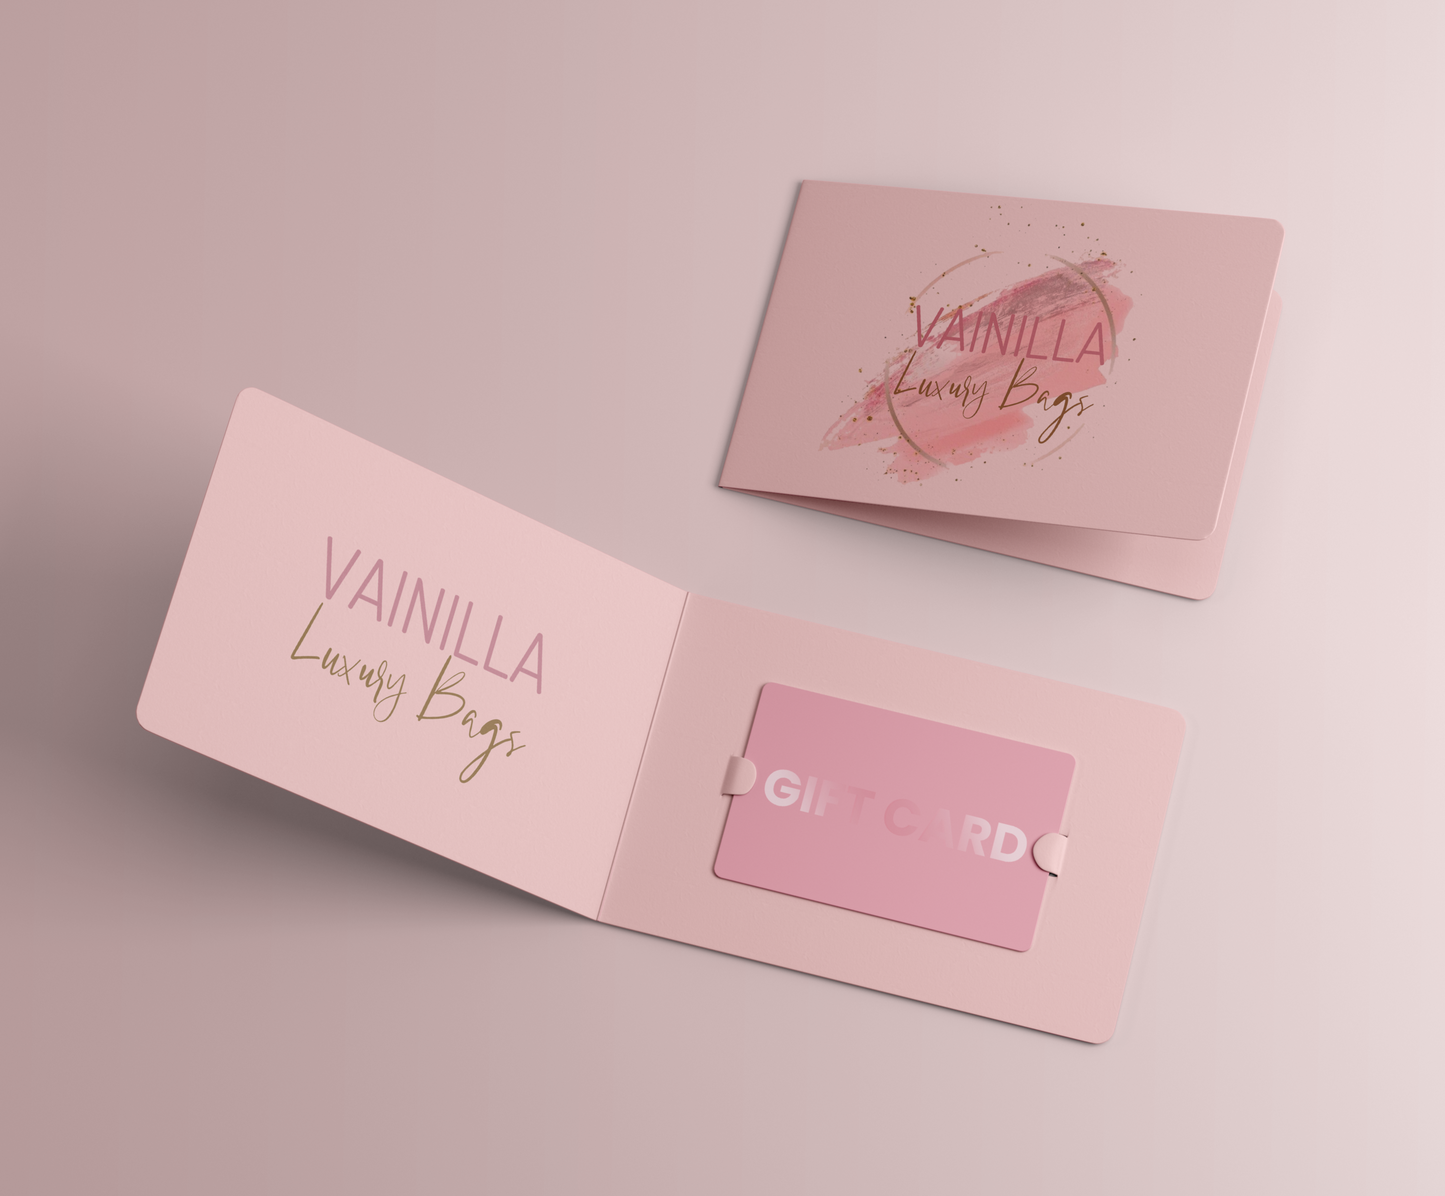 Vainilla Luxury Bags Gift Card